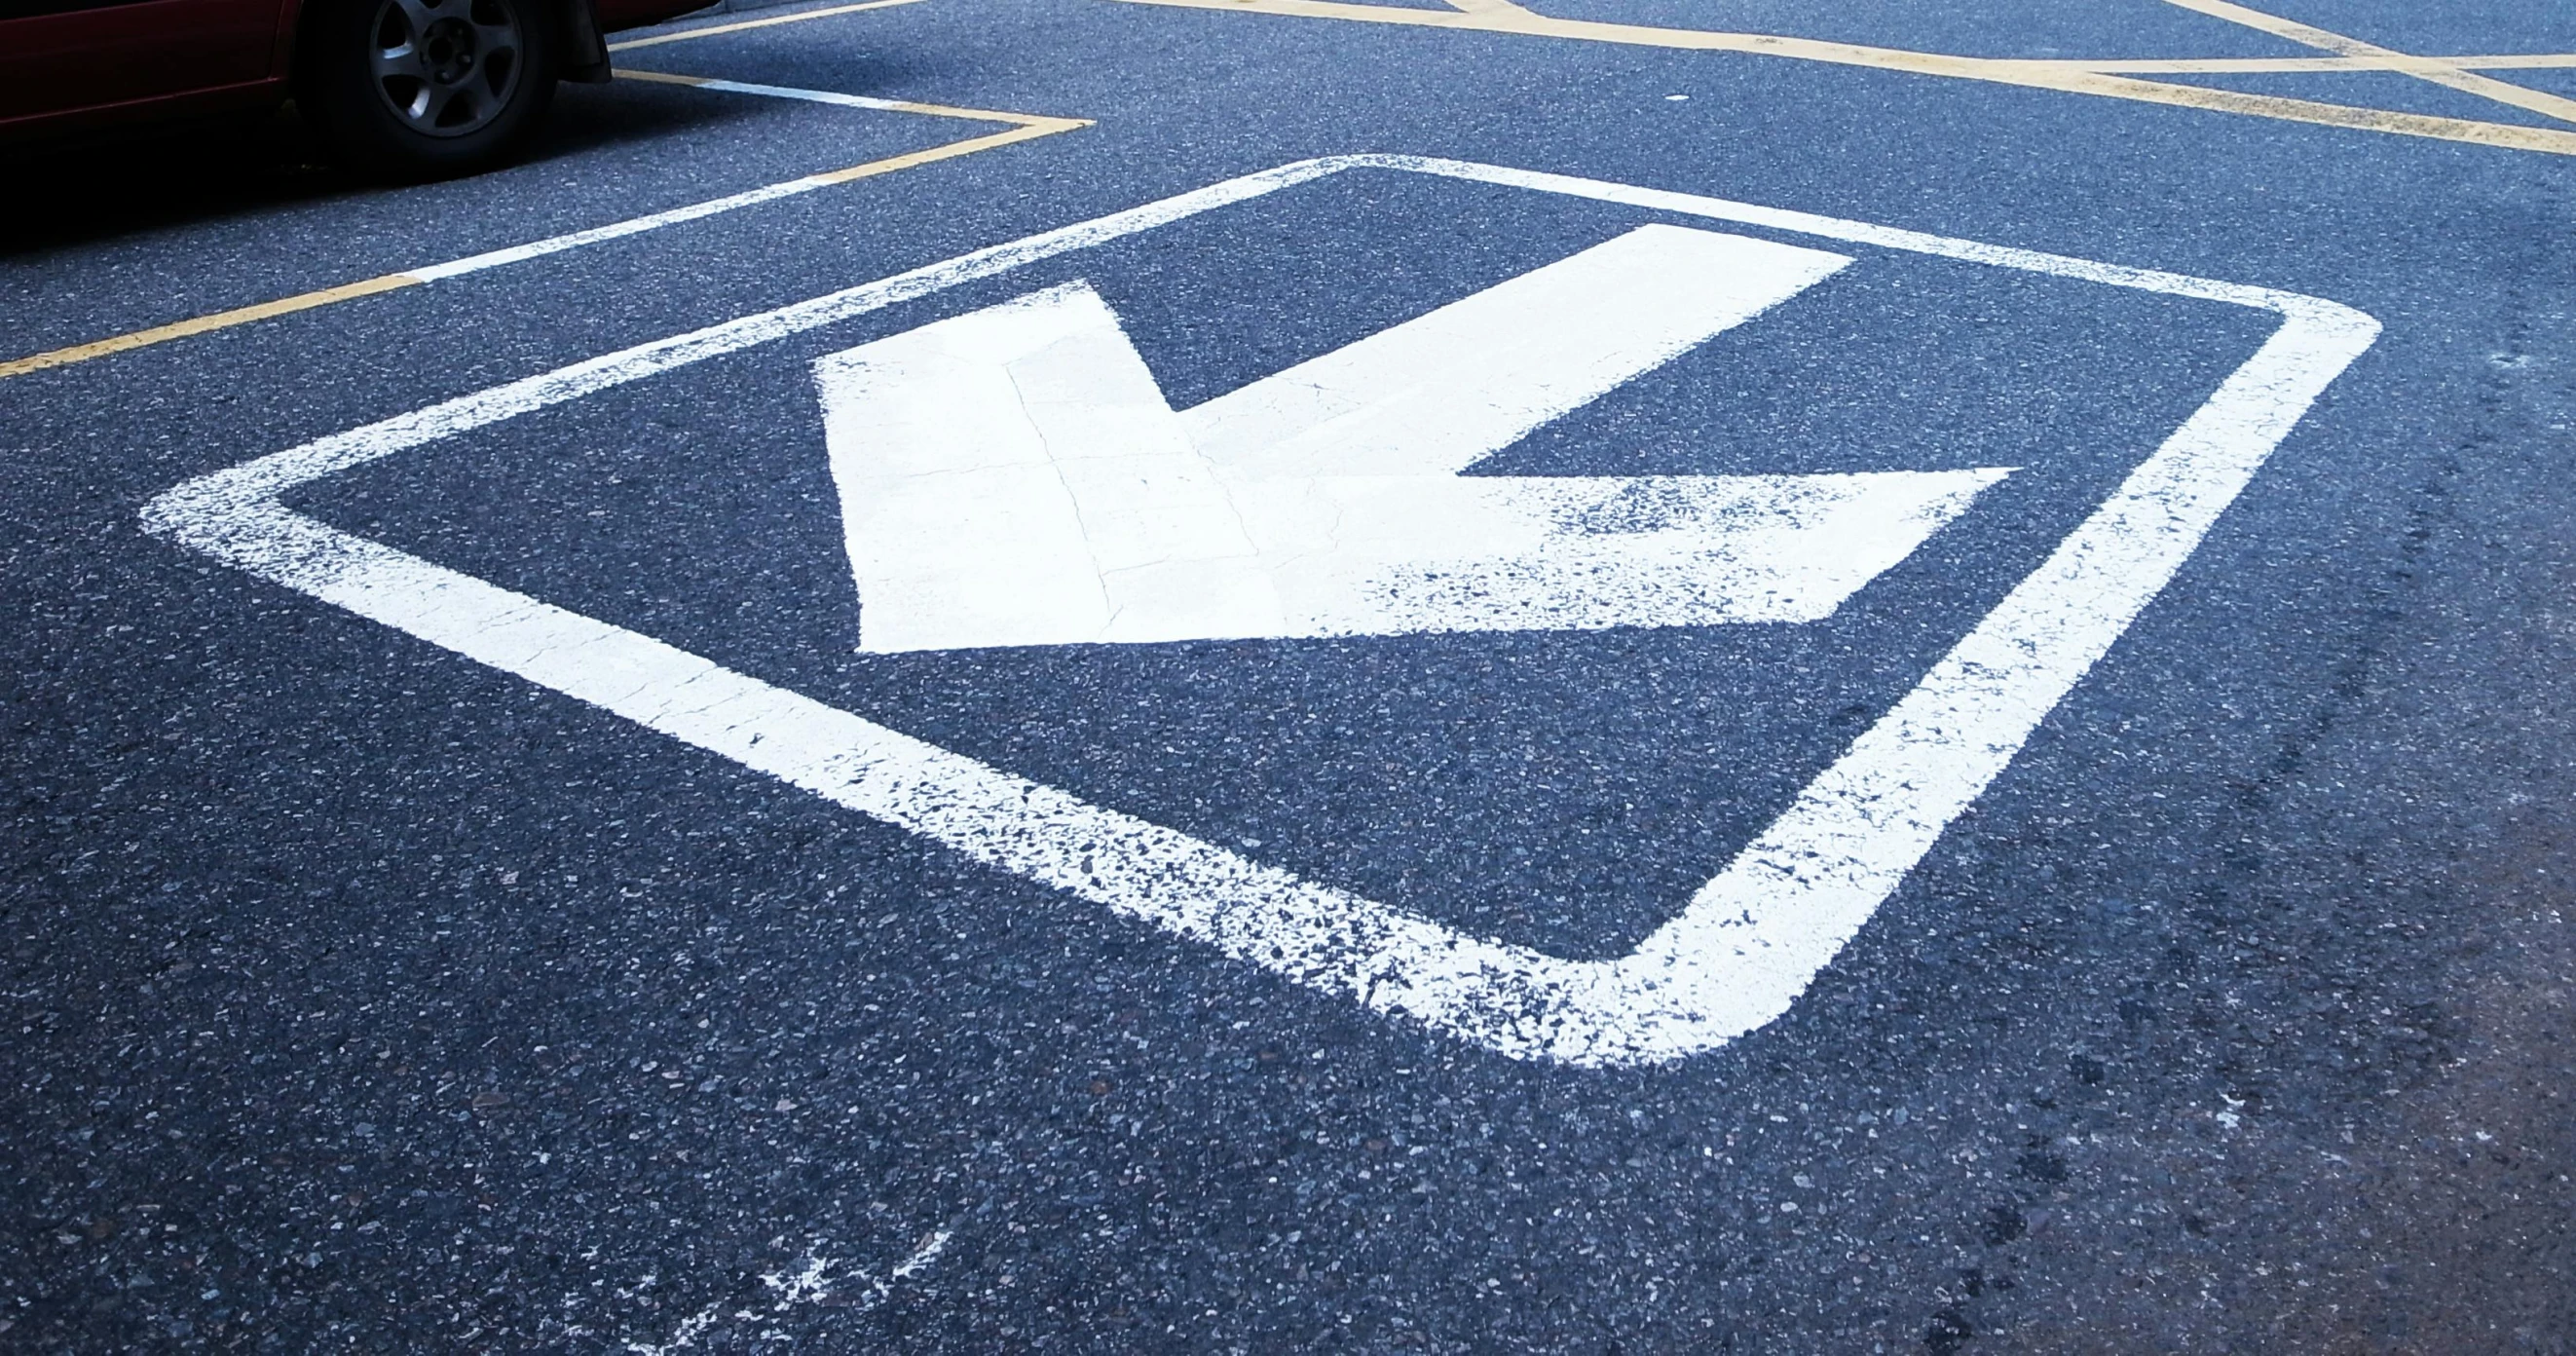 a white arrow painted in the middle of a parking lot, unsplash, auto-destructive art, square, pictogram, head down, royal commission